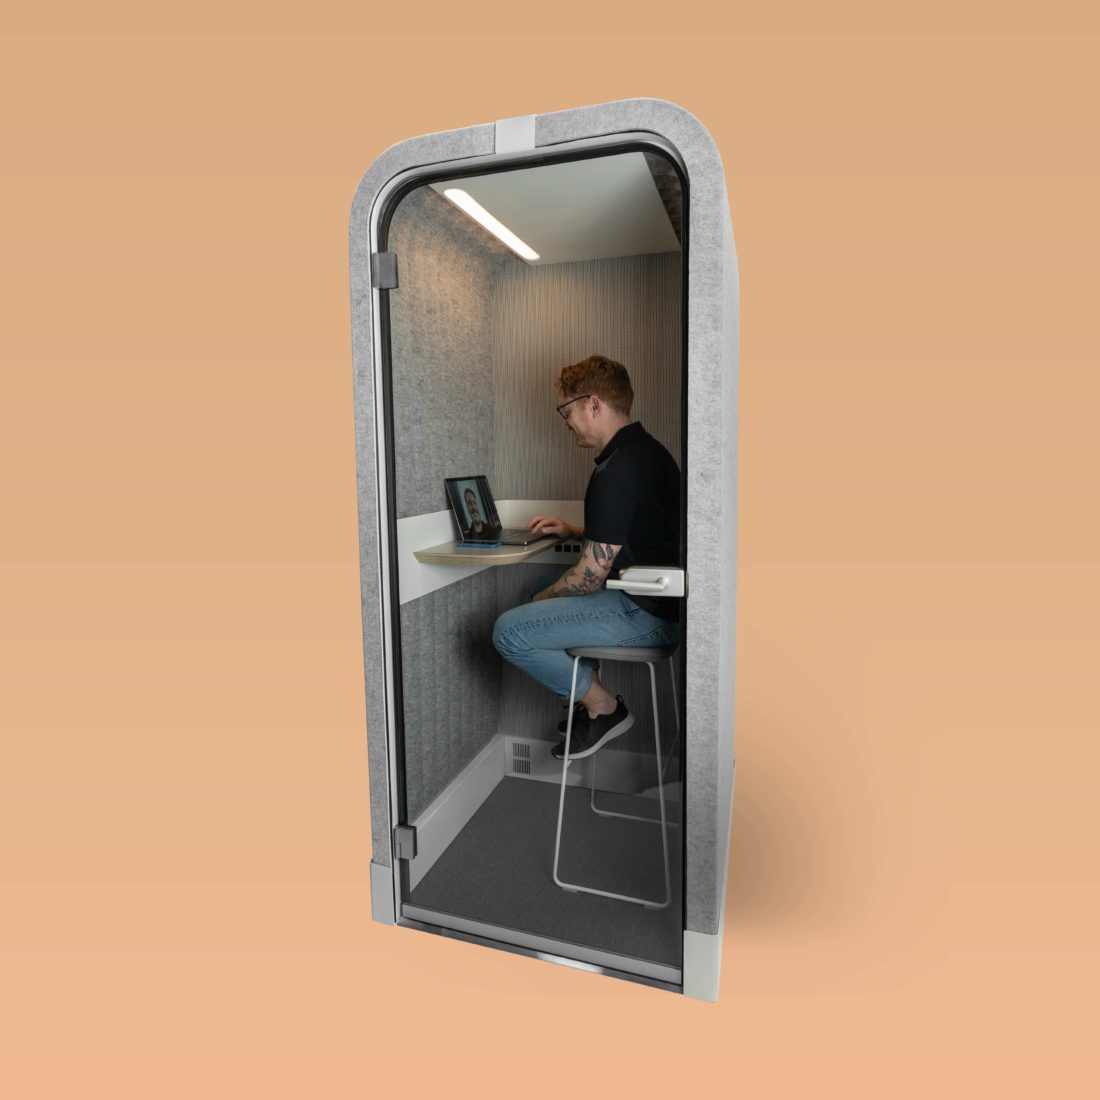 Man sits inside a Loop Phone Booths Flex